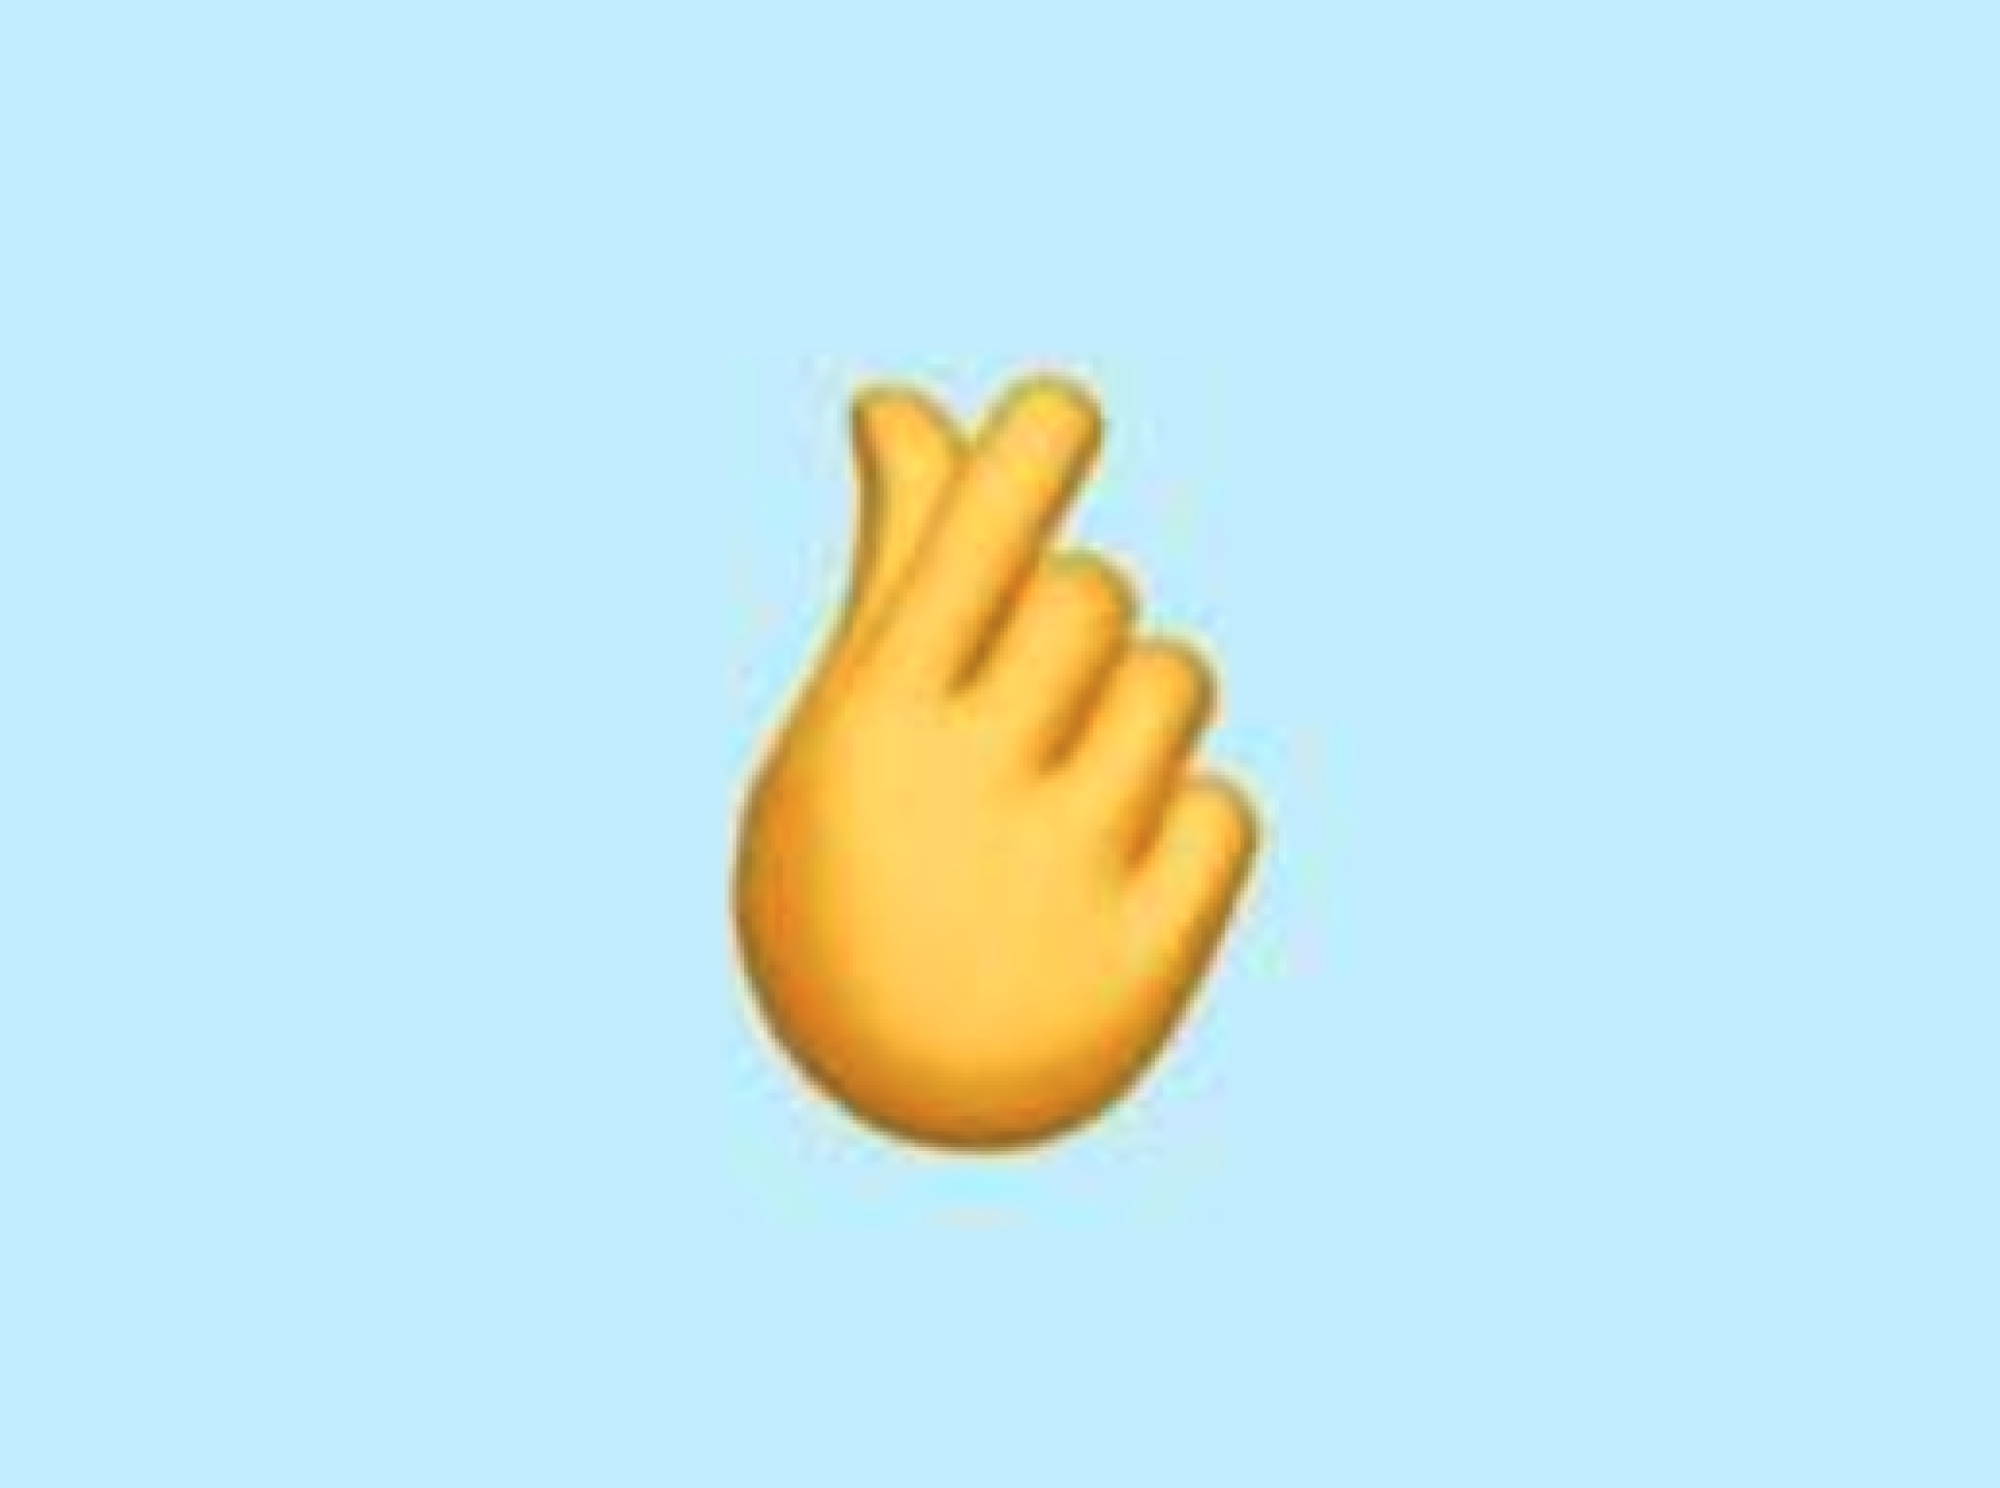 l'emoji doigt-cœur sur fond bleu clair